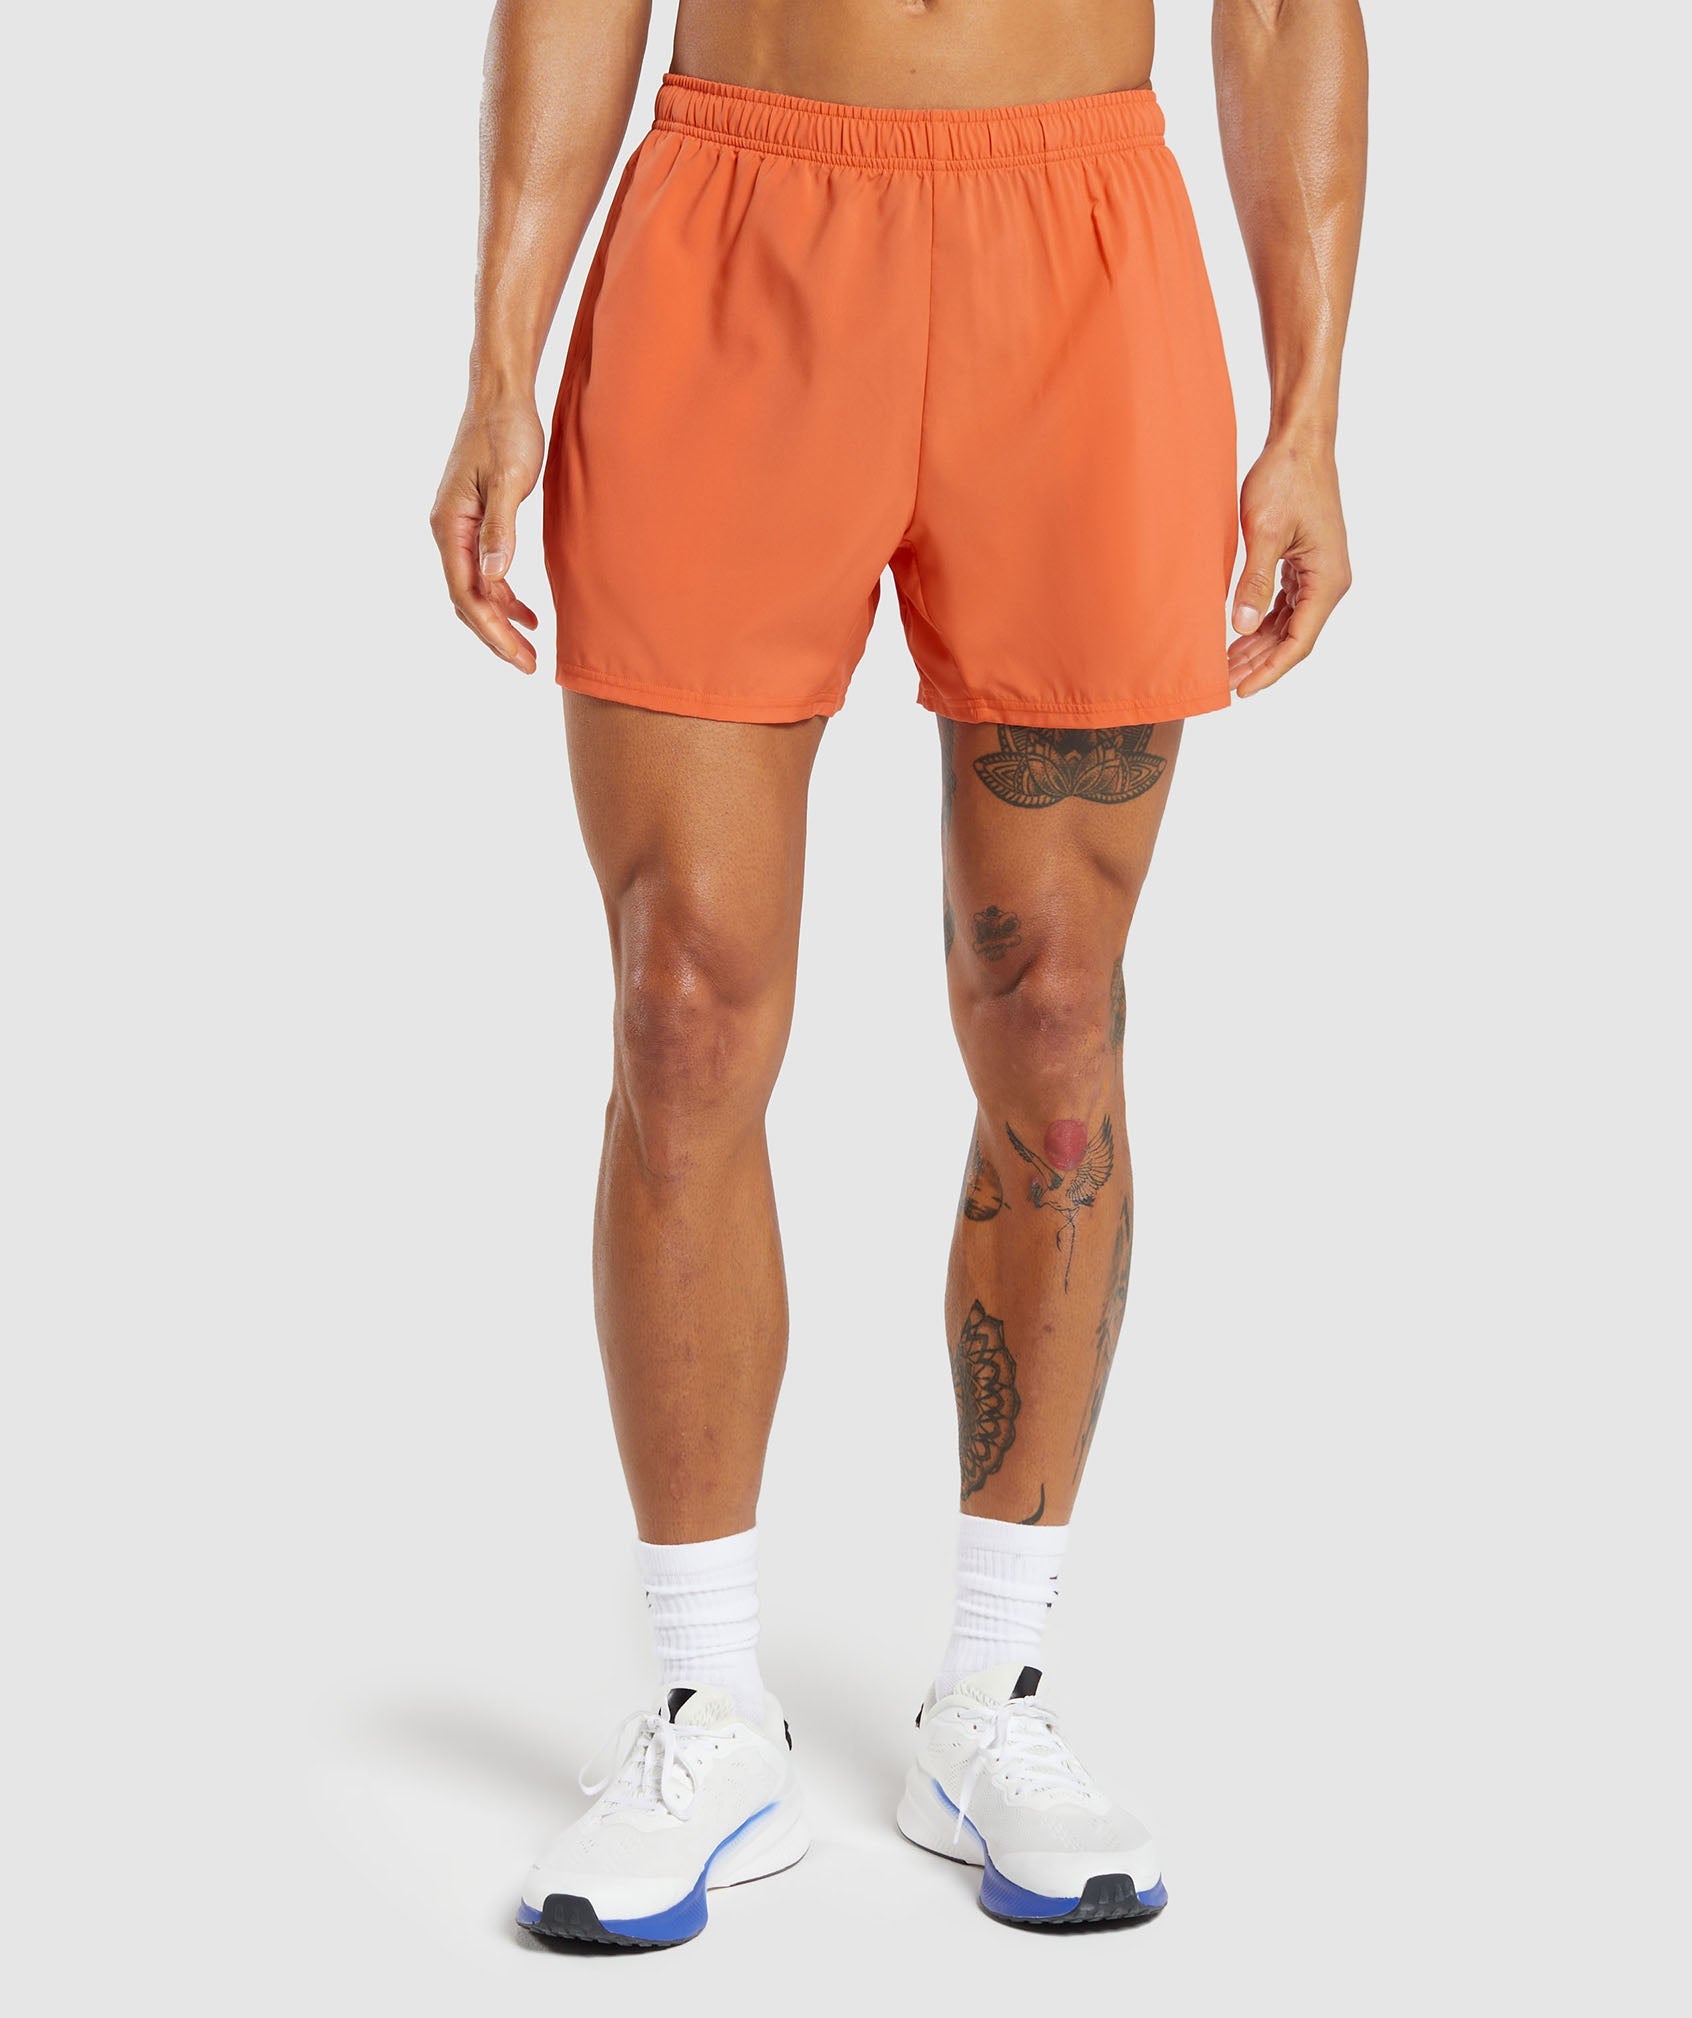 Arrival 5" Shorts in Ignite Orange - view 1